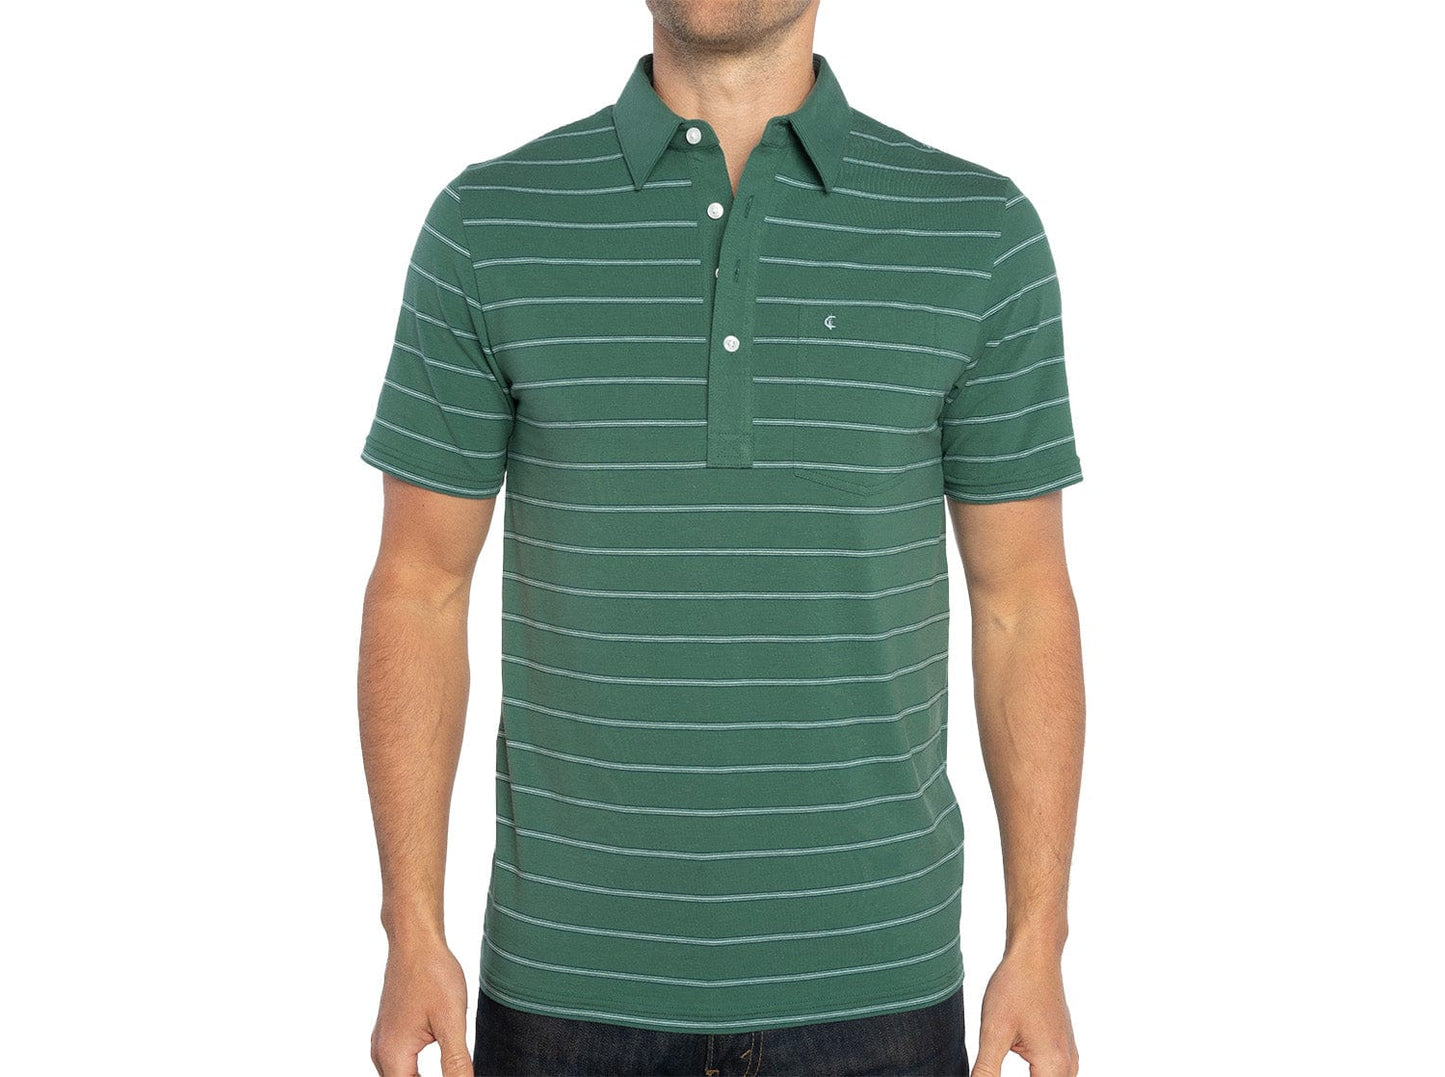 Top-Shelf Players Shirt - Scandi Stripe - Green